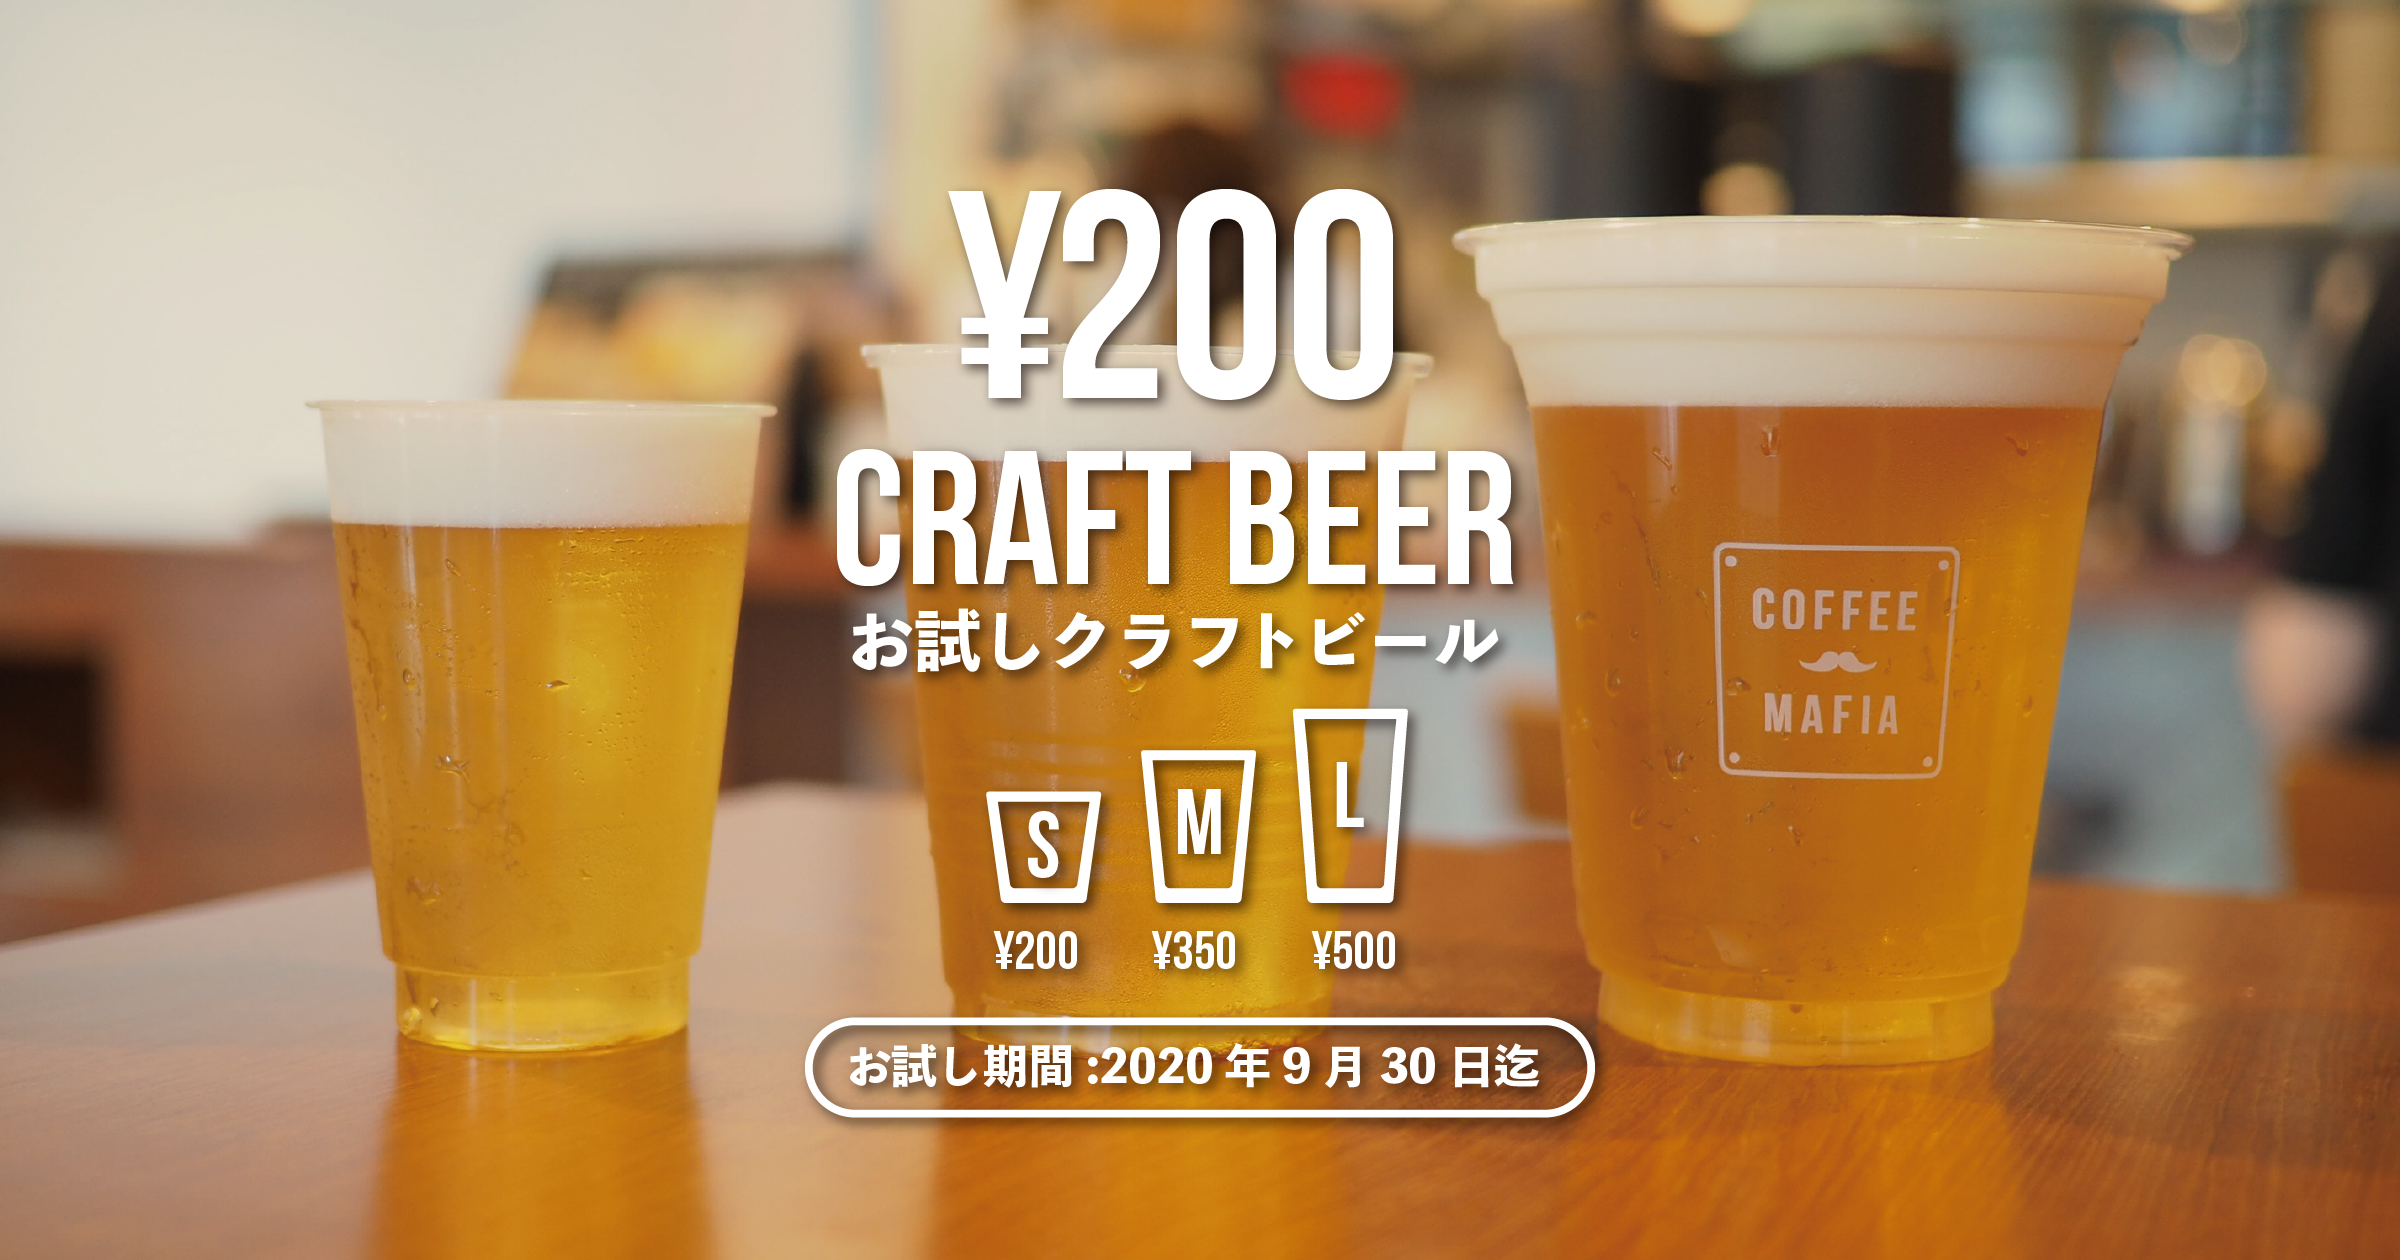 Coffee Mafia西新宿店 種類以上のクラフトビールを0円で販売開始 株式会社favyのプレスリリース